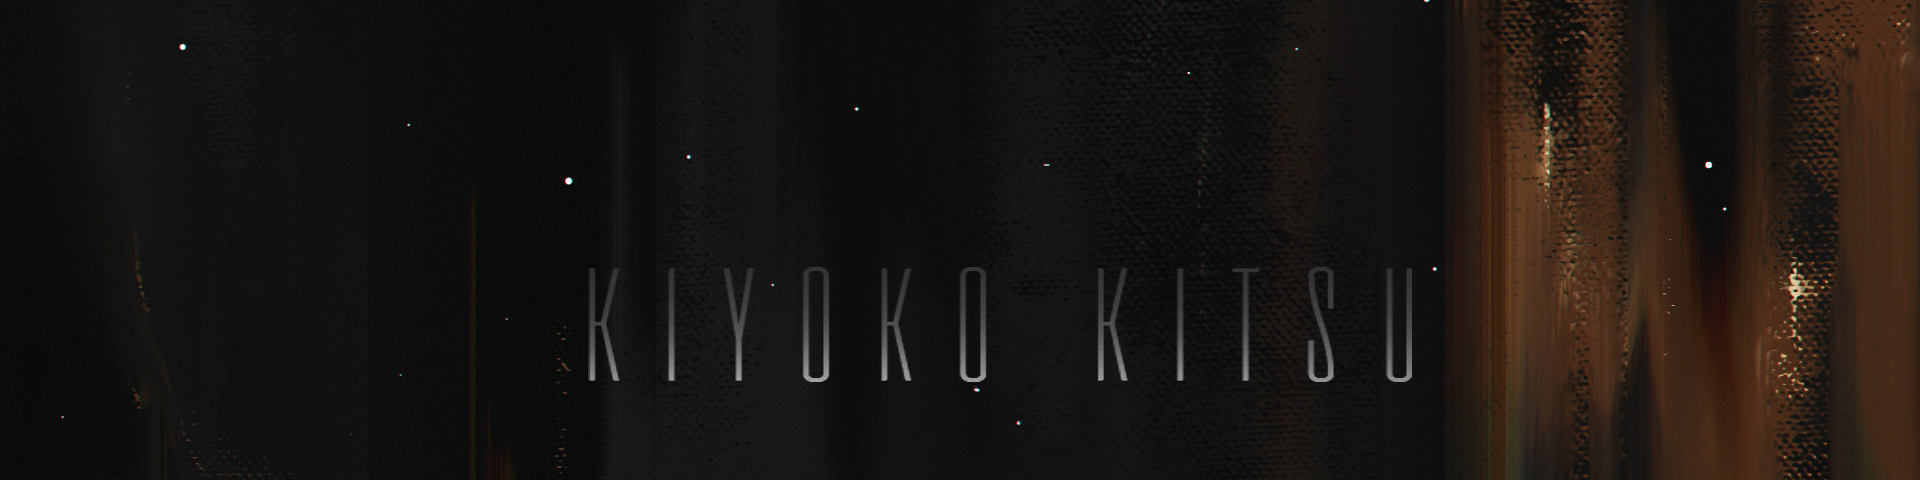 creator cover KiyokoKitsu